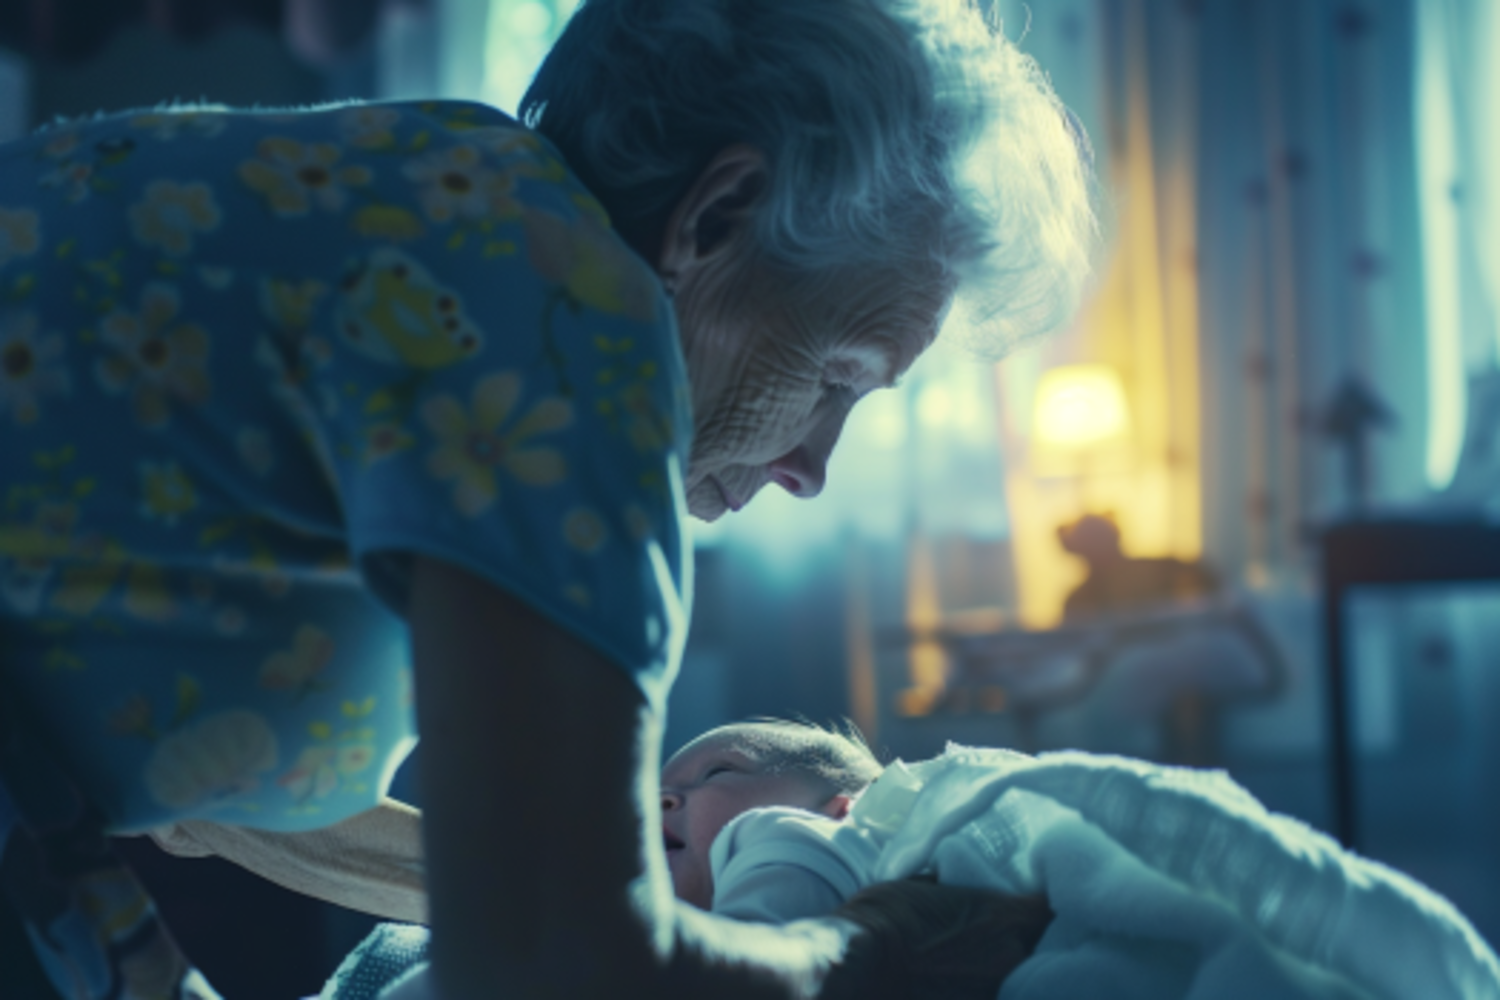 Grandma tending to a baby | Source: Midjourney